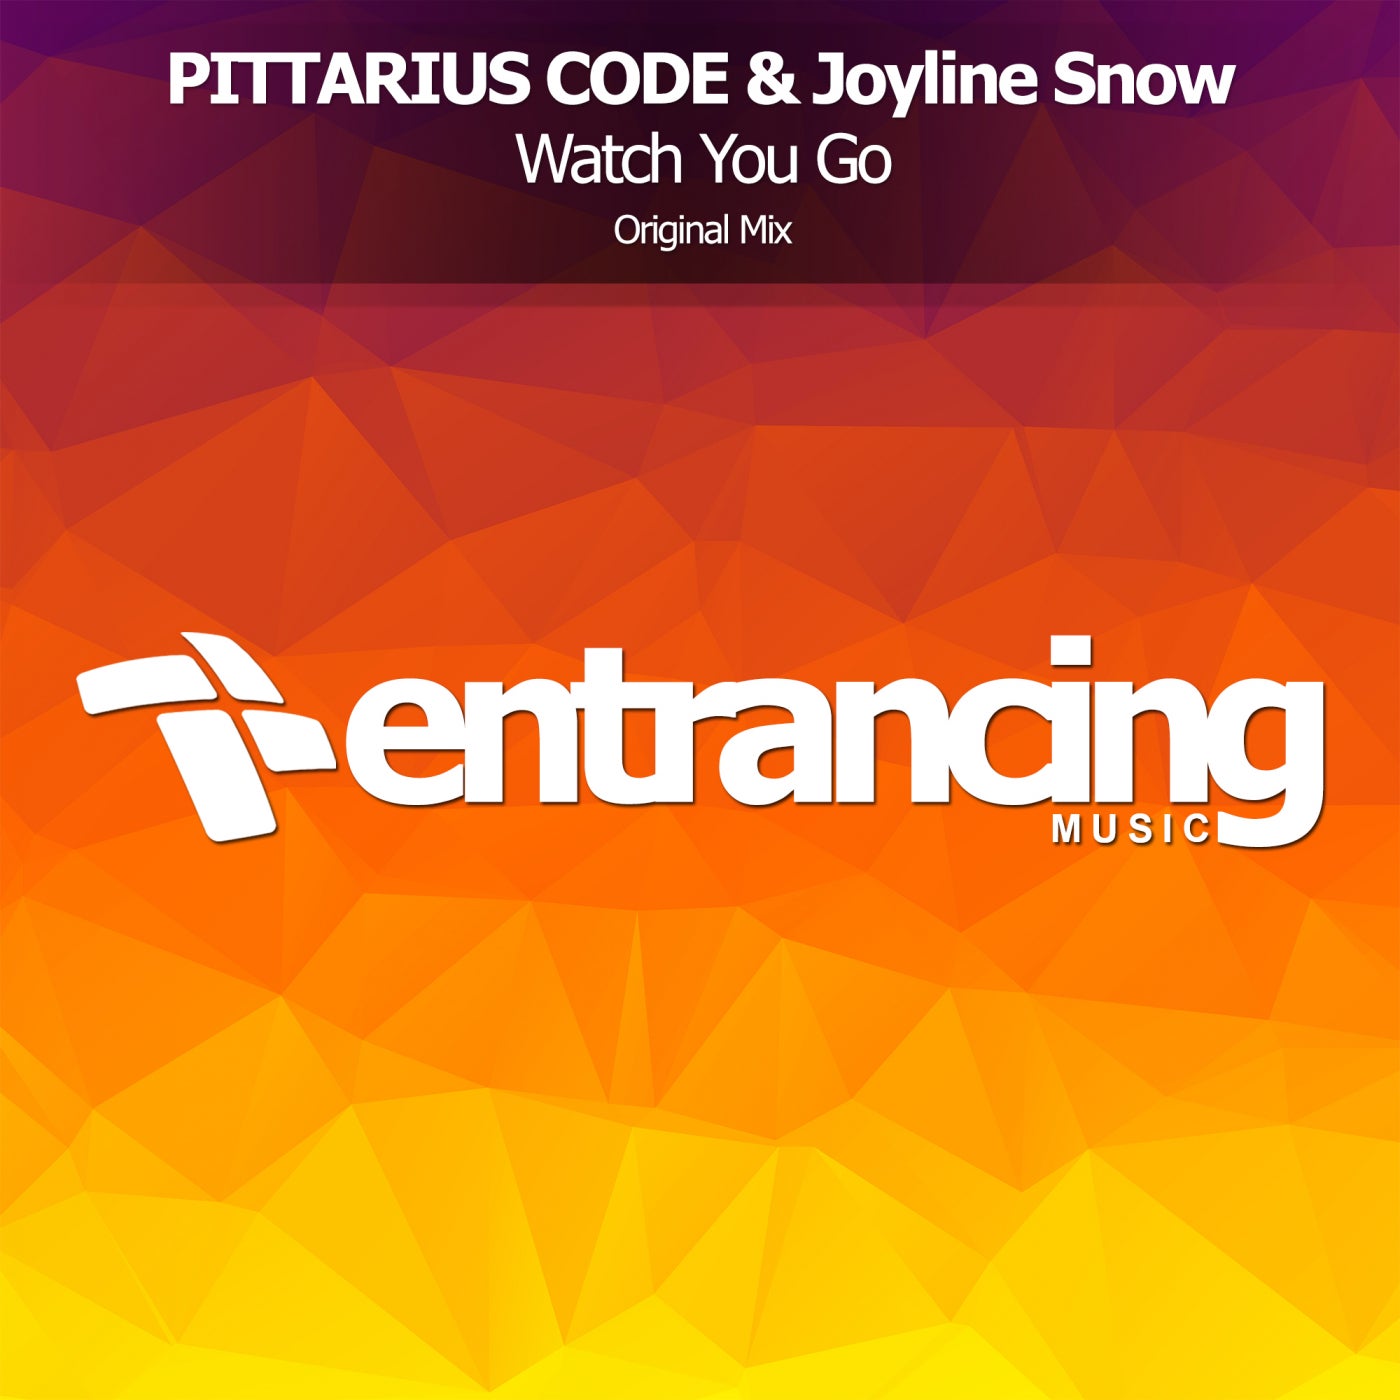 Pittarius Code & Joyline Snow - Watch You Go (Original Mix)